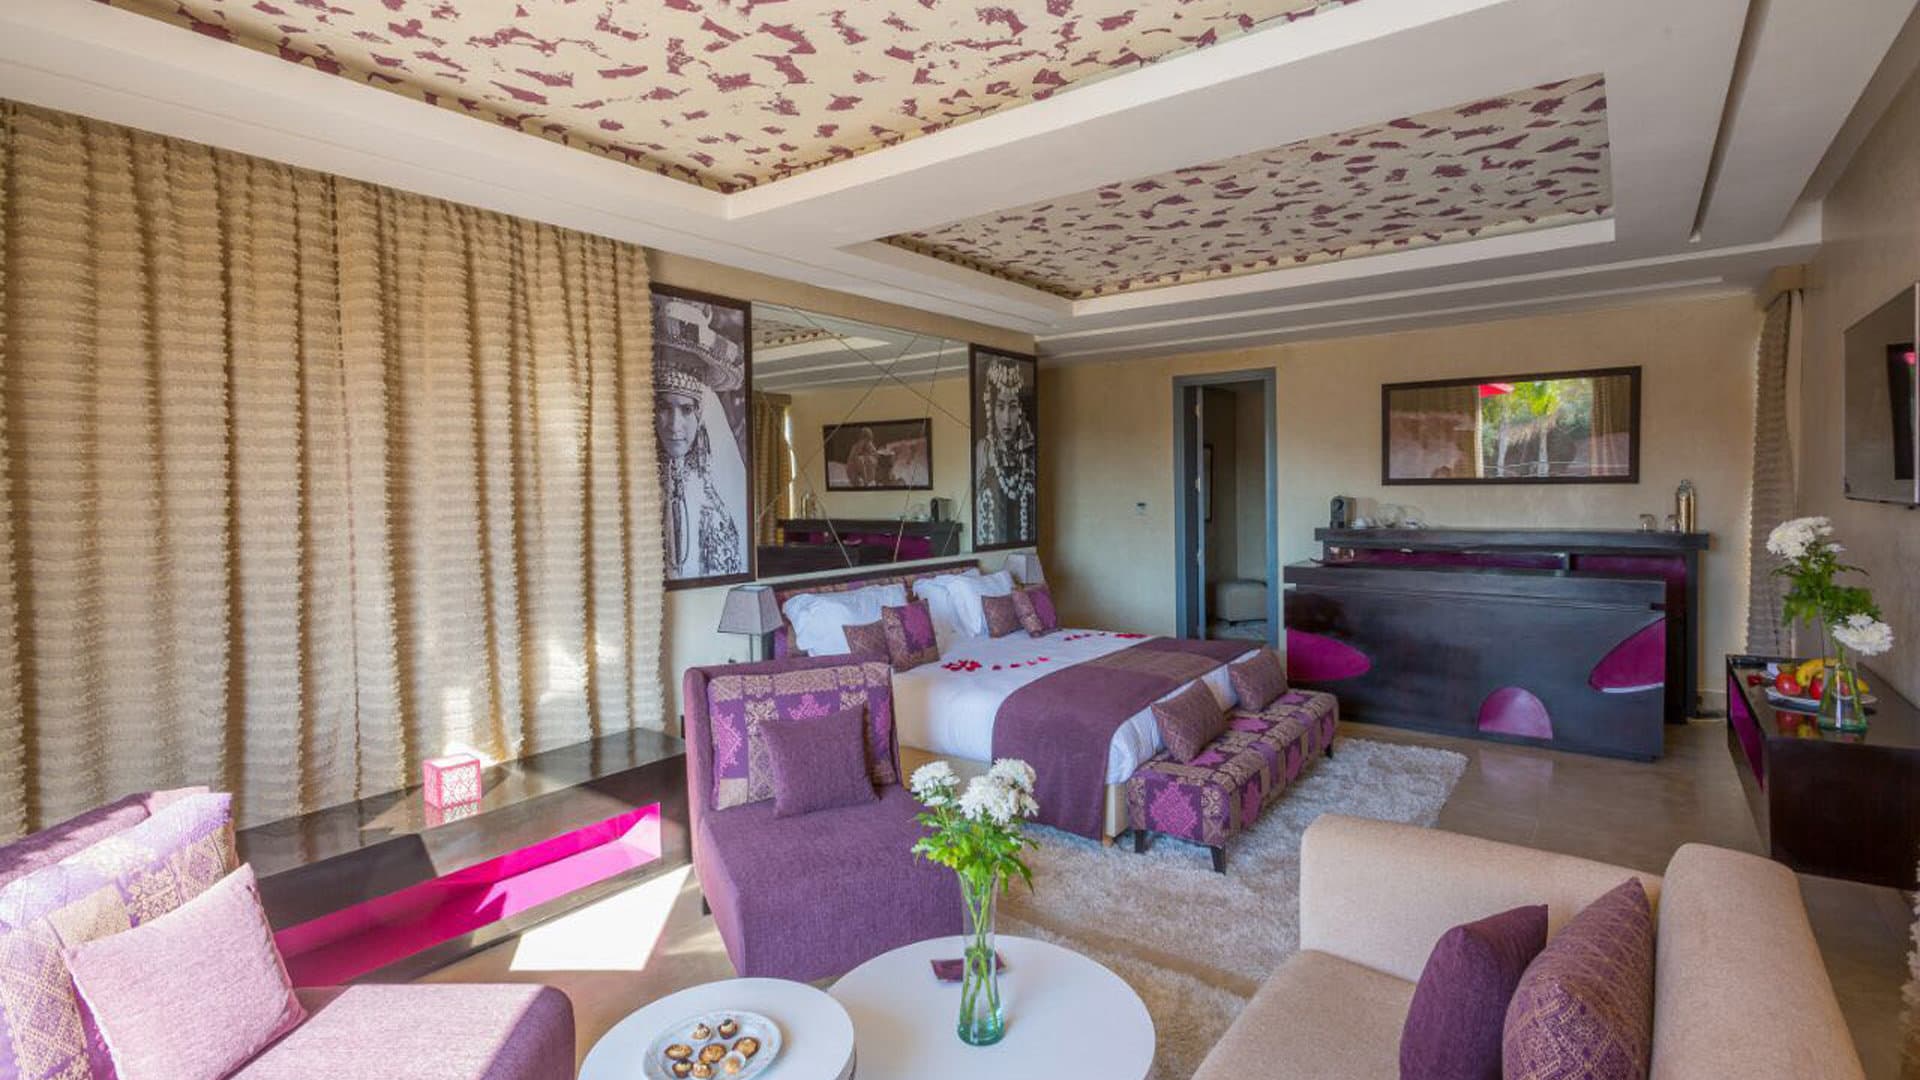 11 Bedroom Villa For Sale Marrakech Lp08724 1a33d6785283b.jpg